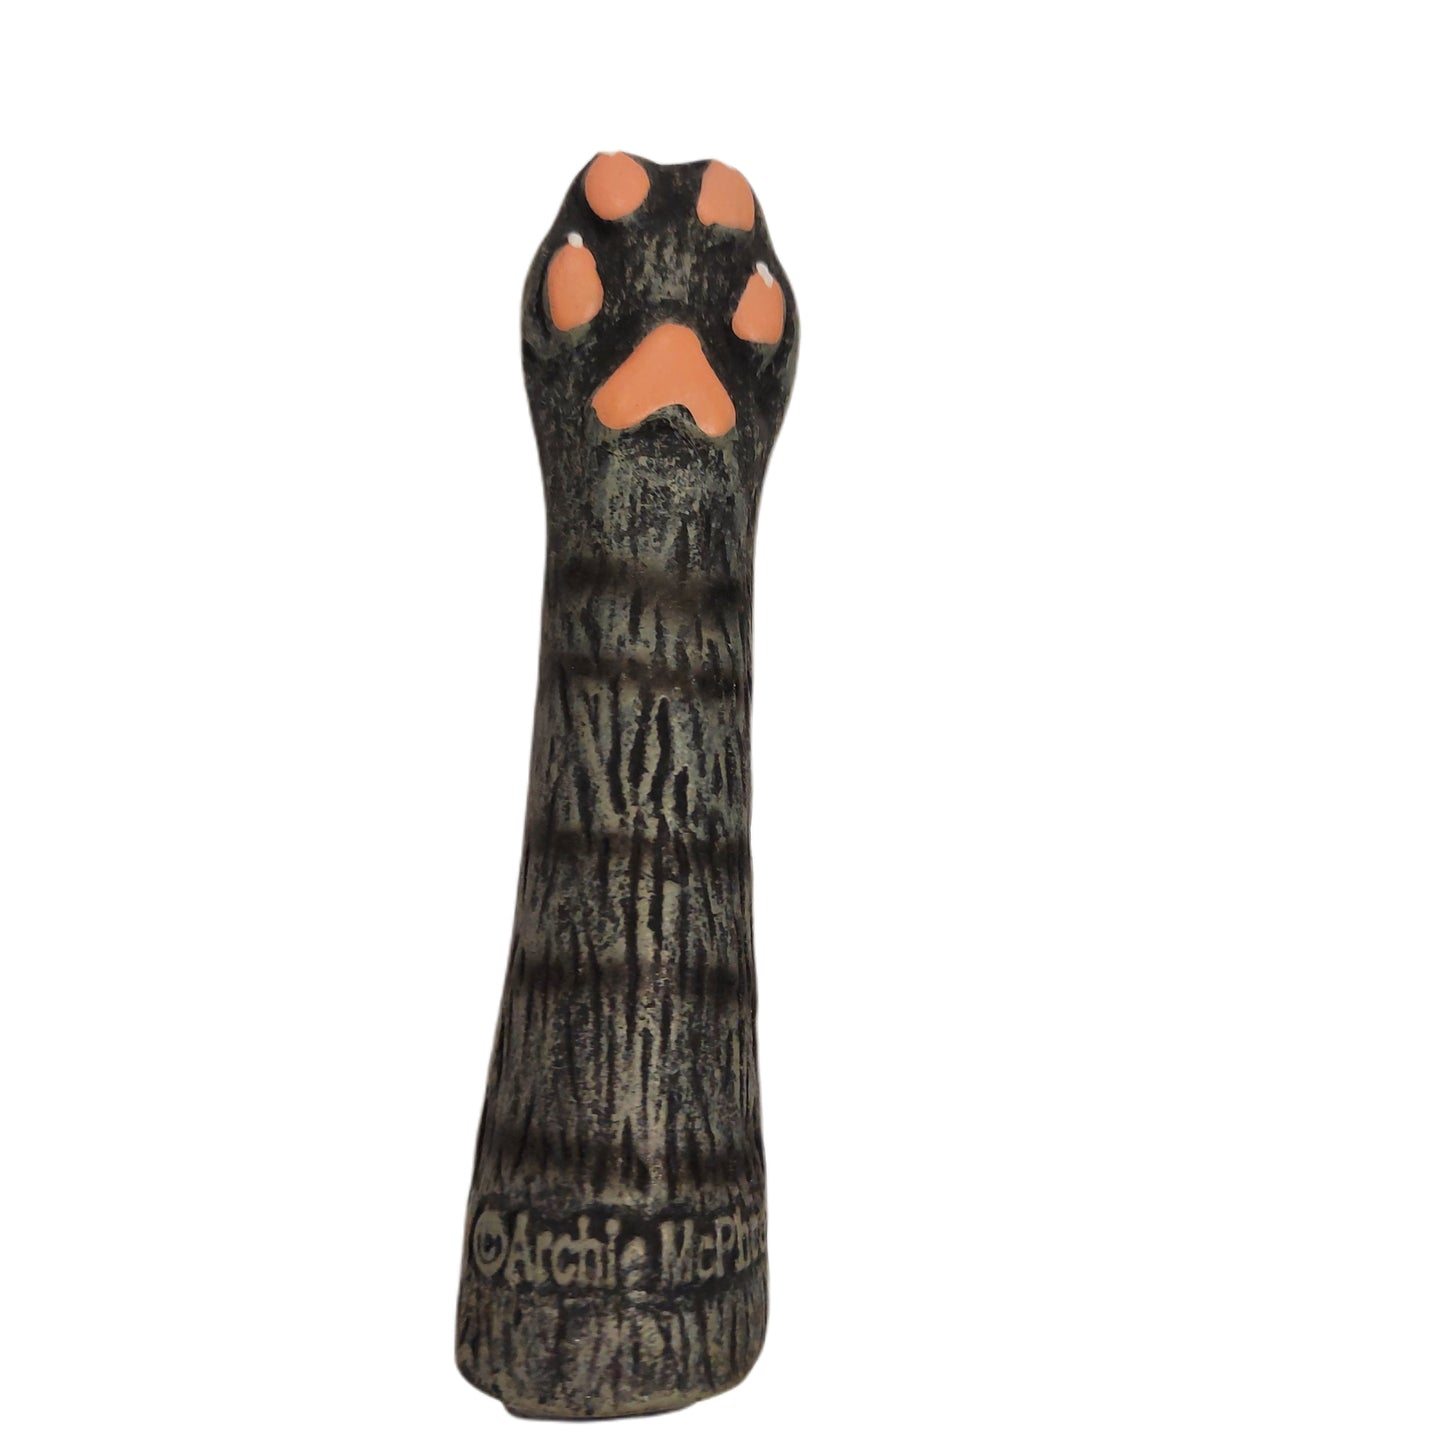 Cat Paw Finger Puppet